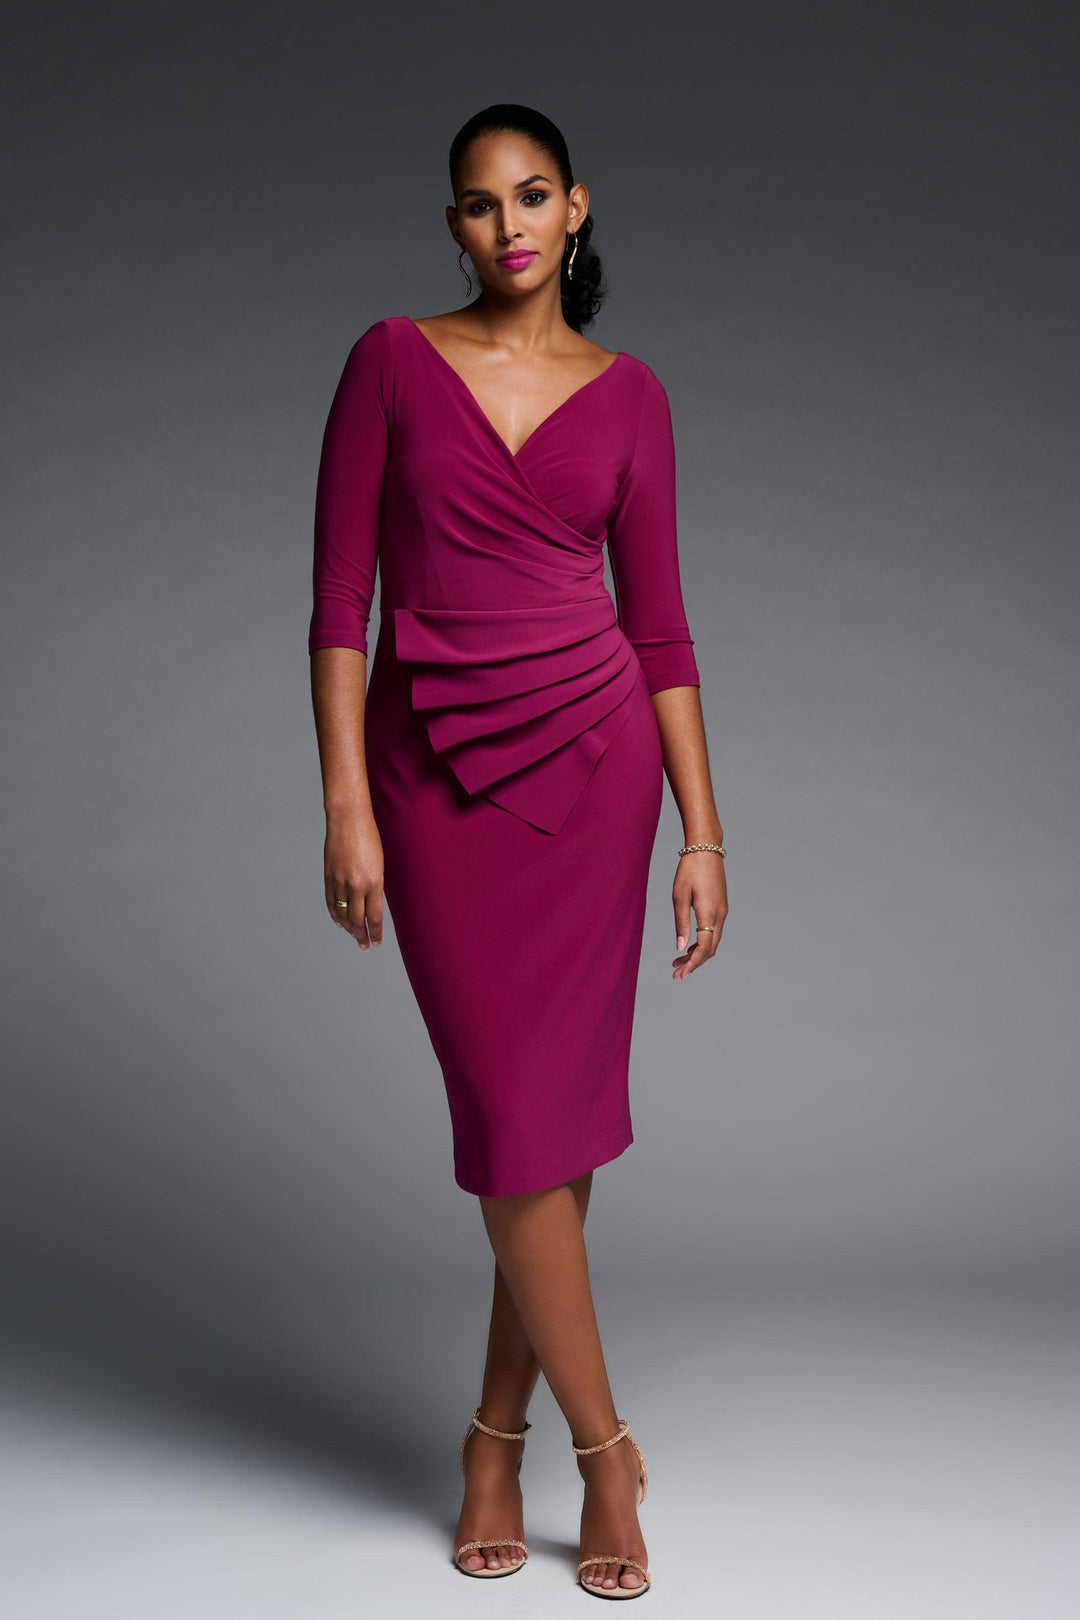 Joseph Ribkoff Vineyard Dress Style 223715 - AW22, Dress, New, Pink, Pink Dress ginasmartboutique